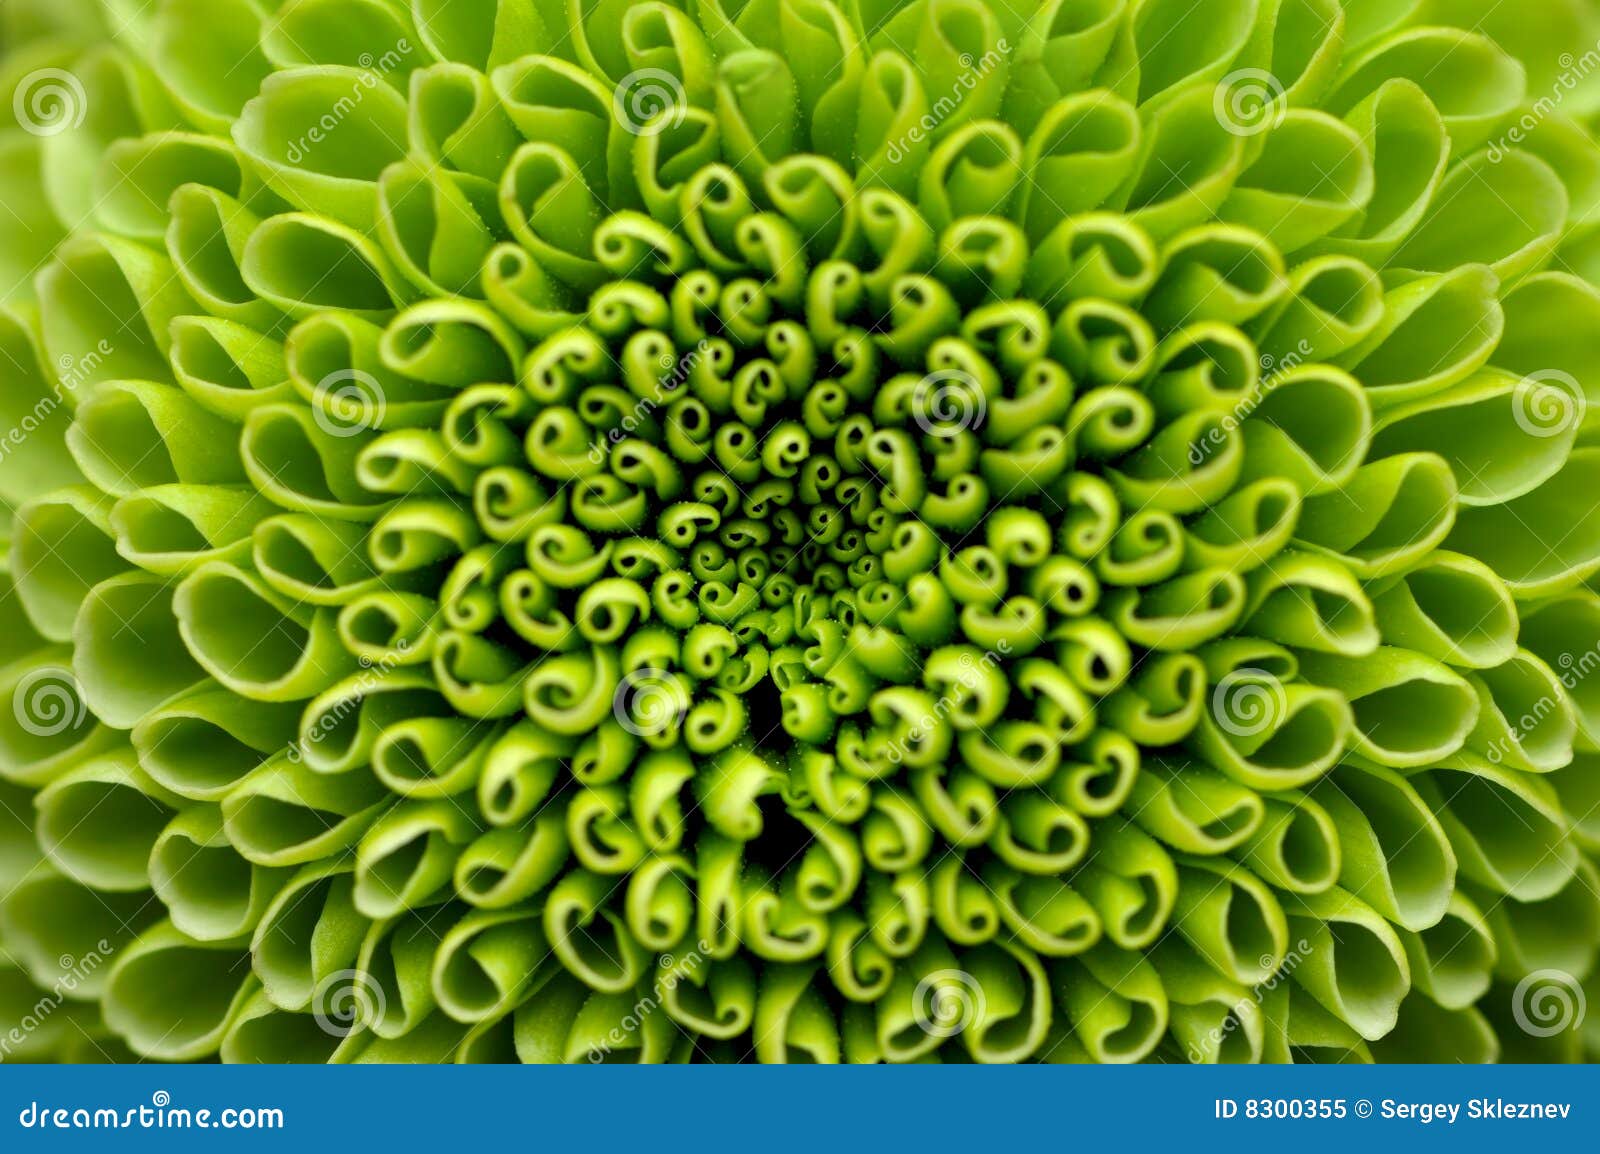 Green flower background stock image. Image of daisy, chrysanthemum